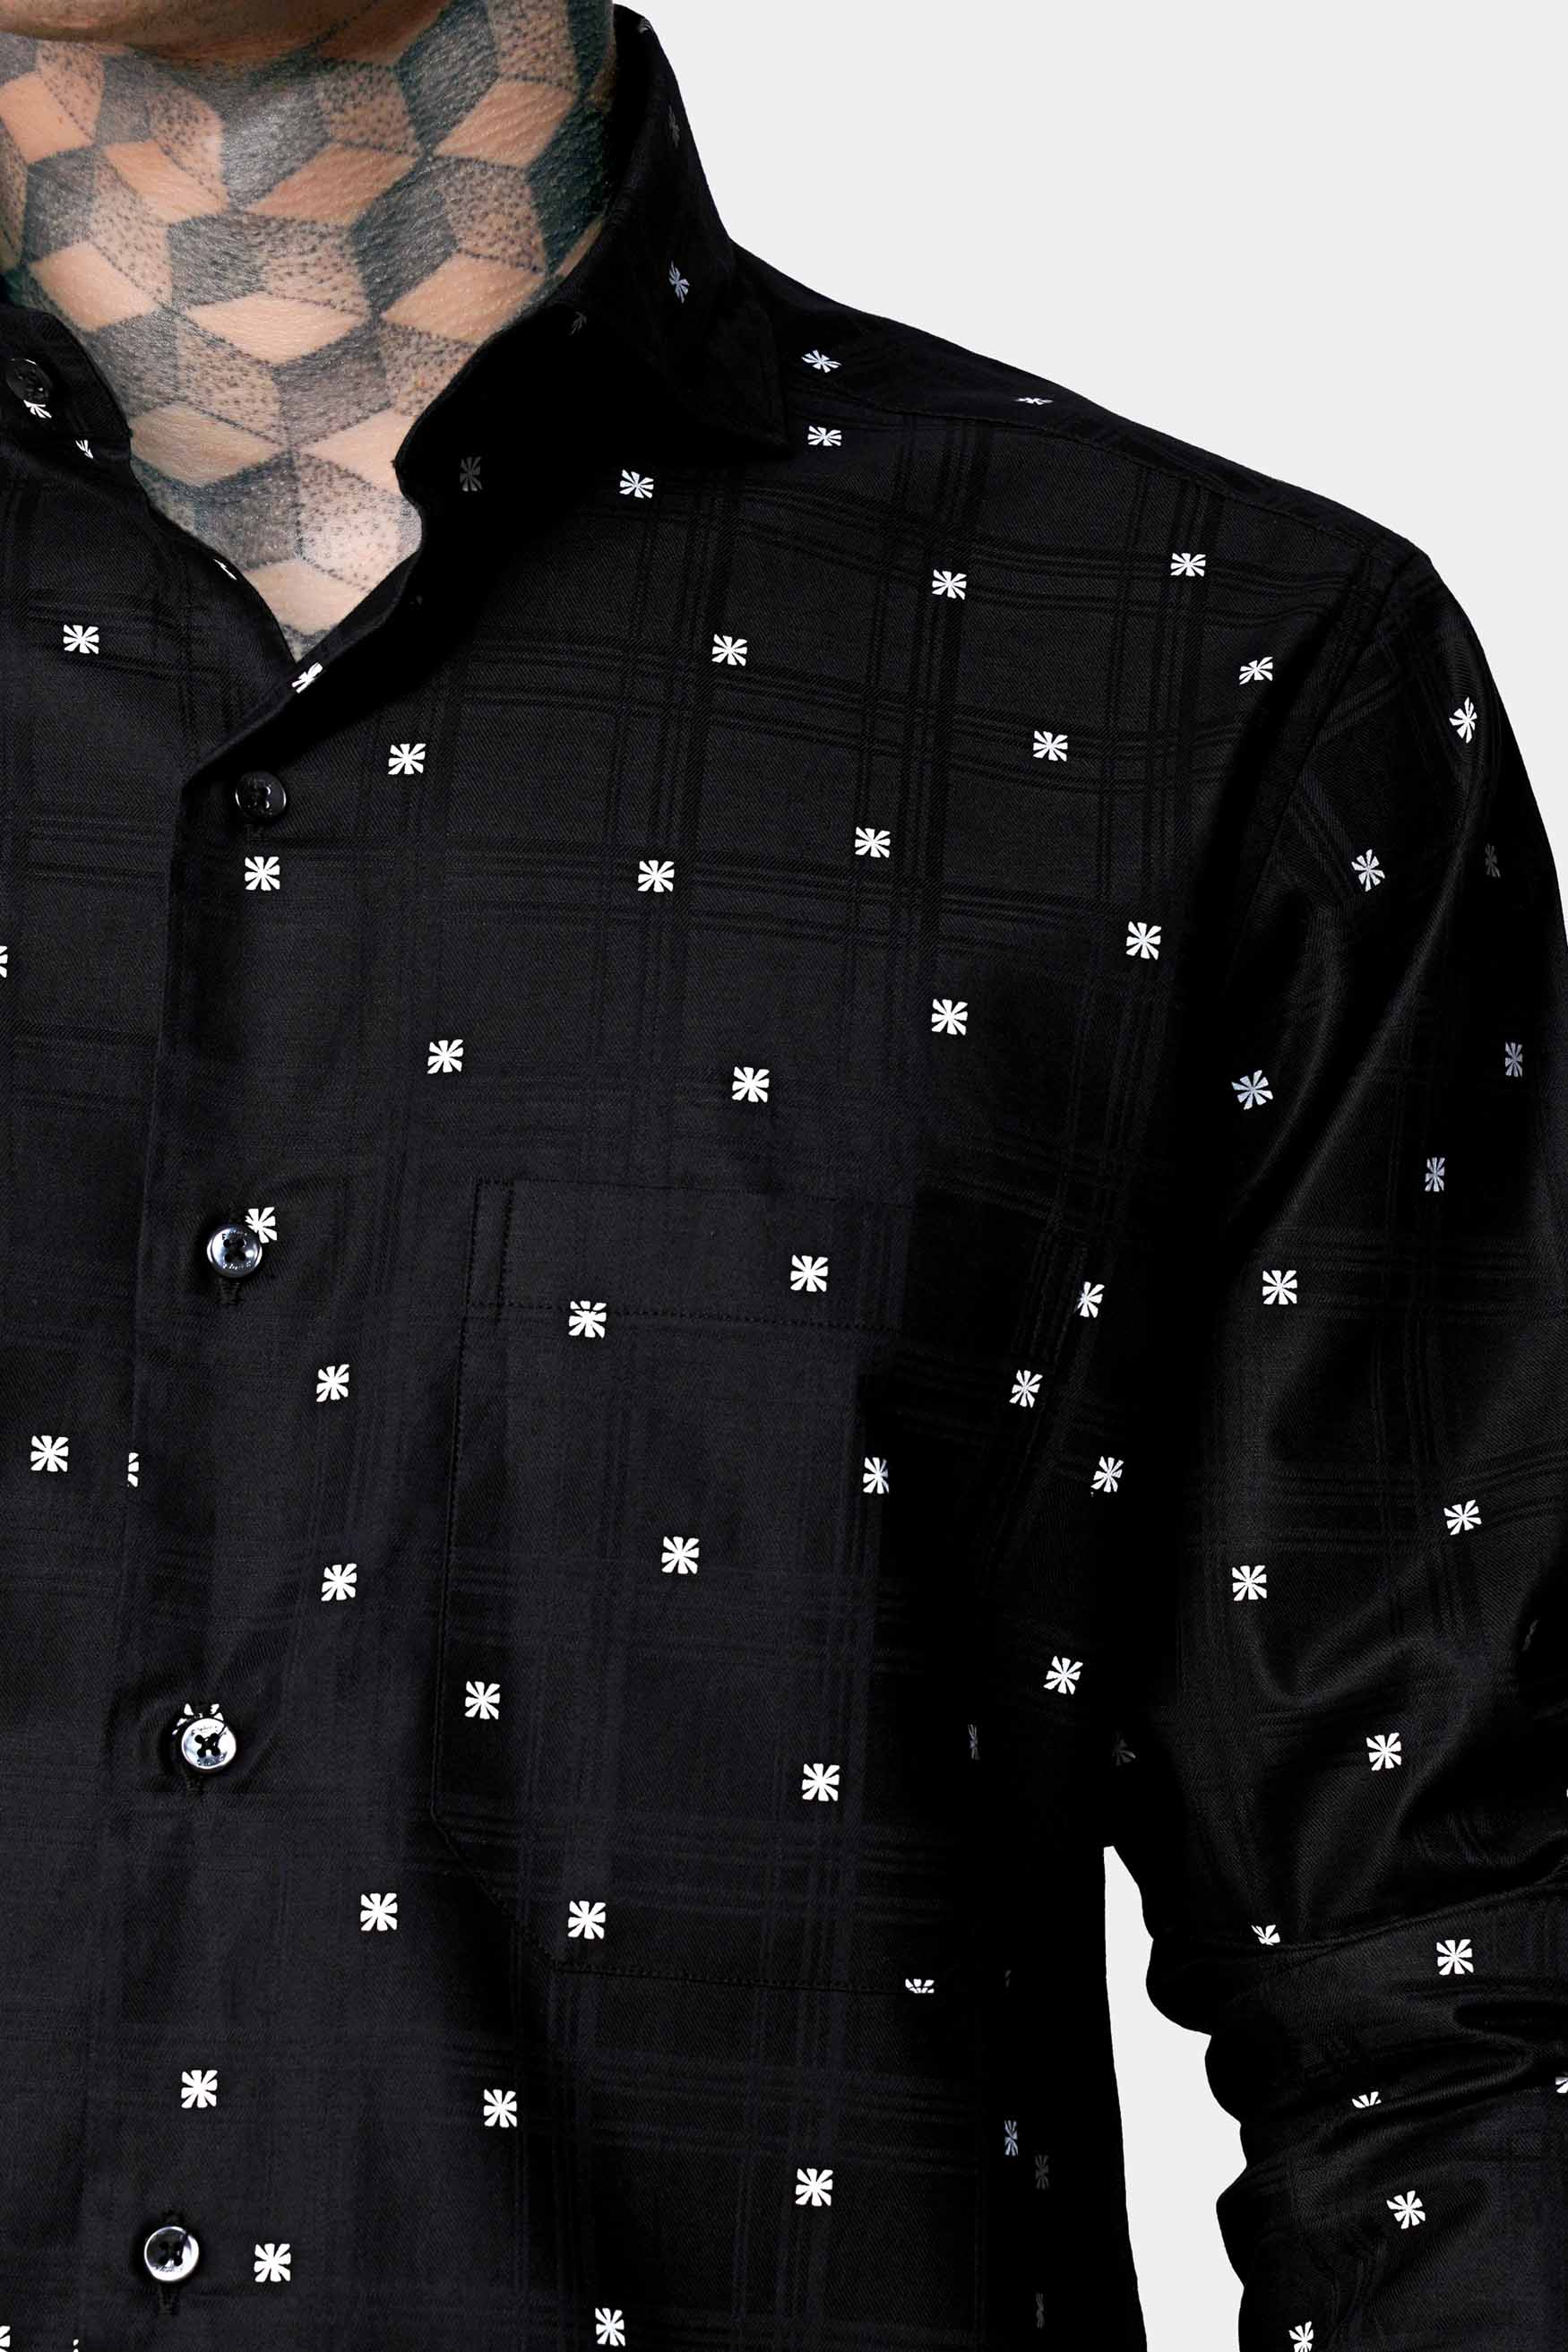 Jade Black and White Subtle Checkered Dobby Textured Premium Giza Cotton Shirt 11457-CA-BLK-38, 11457-CA-BLK-H-38, 11457-CA-BLK-39, 11457-CA-BLK-H-39, 11457-CA-BLK-40, 11457-CA-BLK-H-40, 11457-CA-BLK-42, 11457-CA-BLK-H-42, 11457-CA-BLK-44, 11457-CA-BLK-H-44, 11457-CA-BLK-46, 11457-CA-BLK-H-46, 11457-CA-BLK-48, 11457-CA-BLK-H-48, 11457-CA-BLK-50, 11457-CA-BLK-H-50, 11457-CA-BLK-52, 11457-CA-BLK-H-52